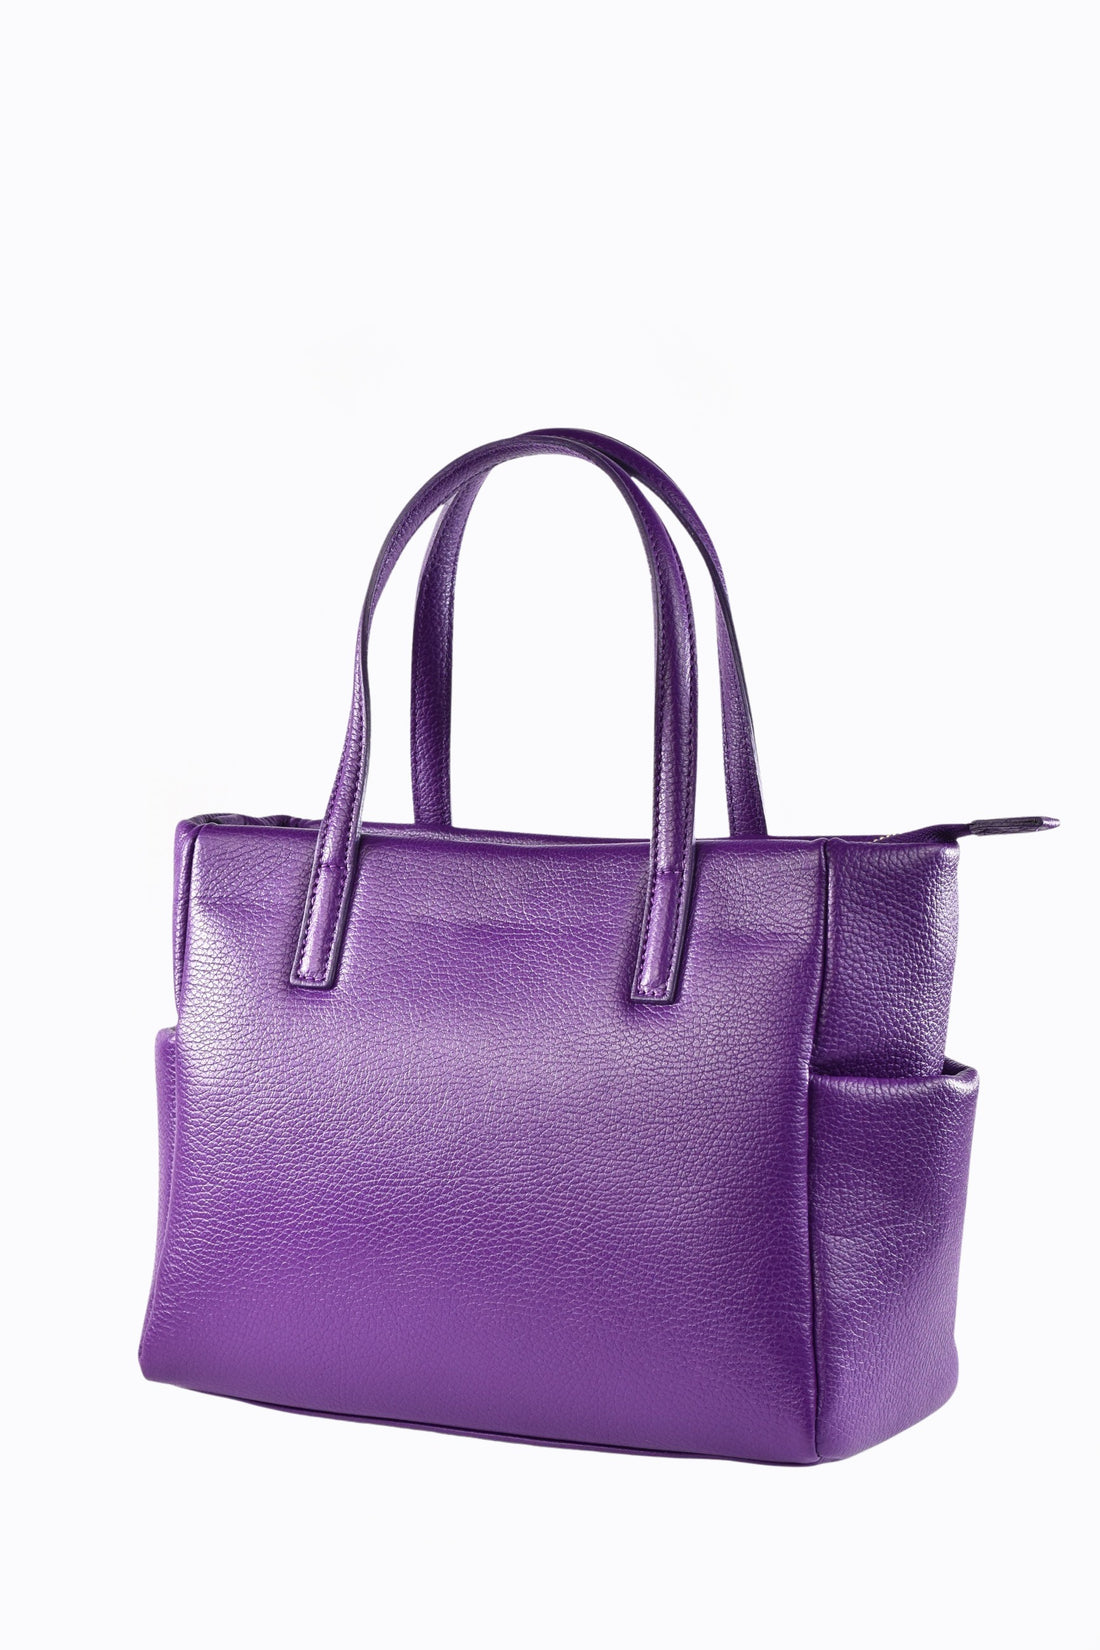 Diana bag in Purple Dollar leather